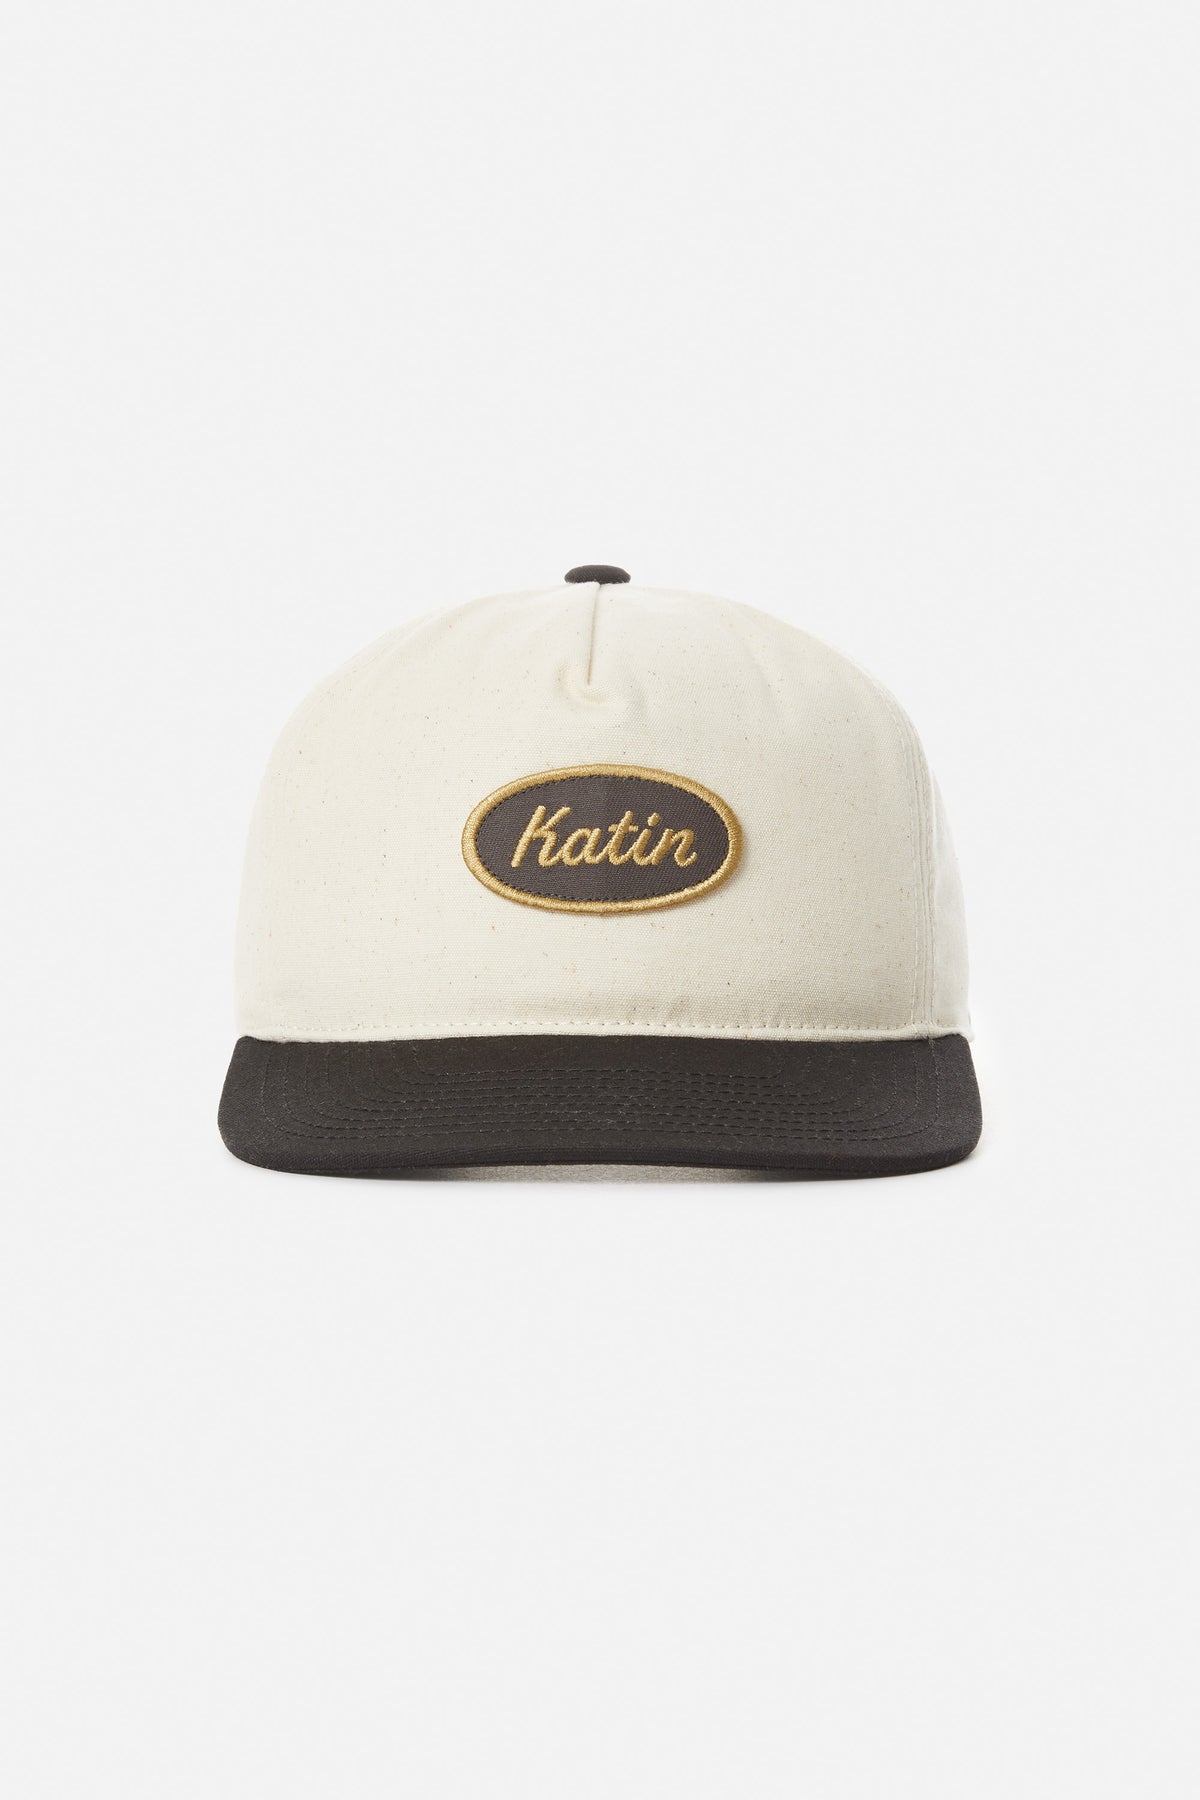 Men's Hats | Trucker, 5 and 6 Panel Hats - Katin USA